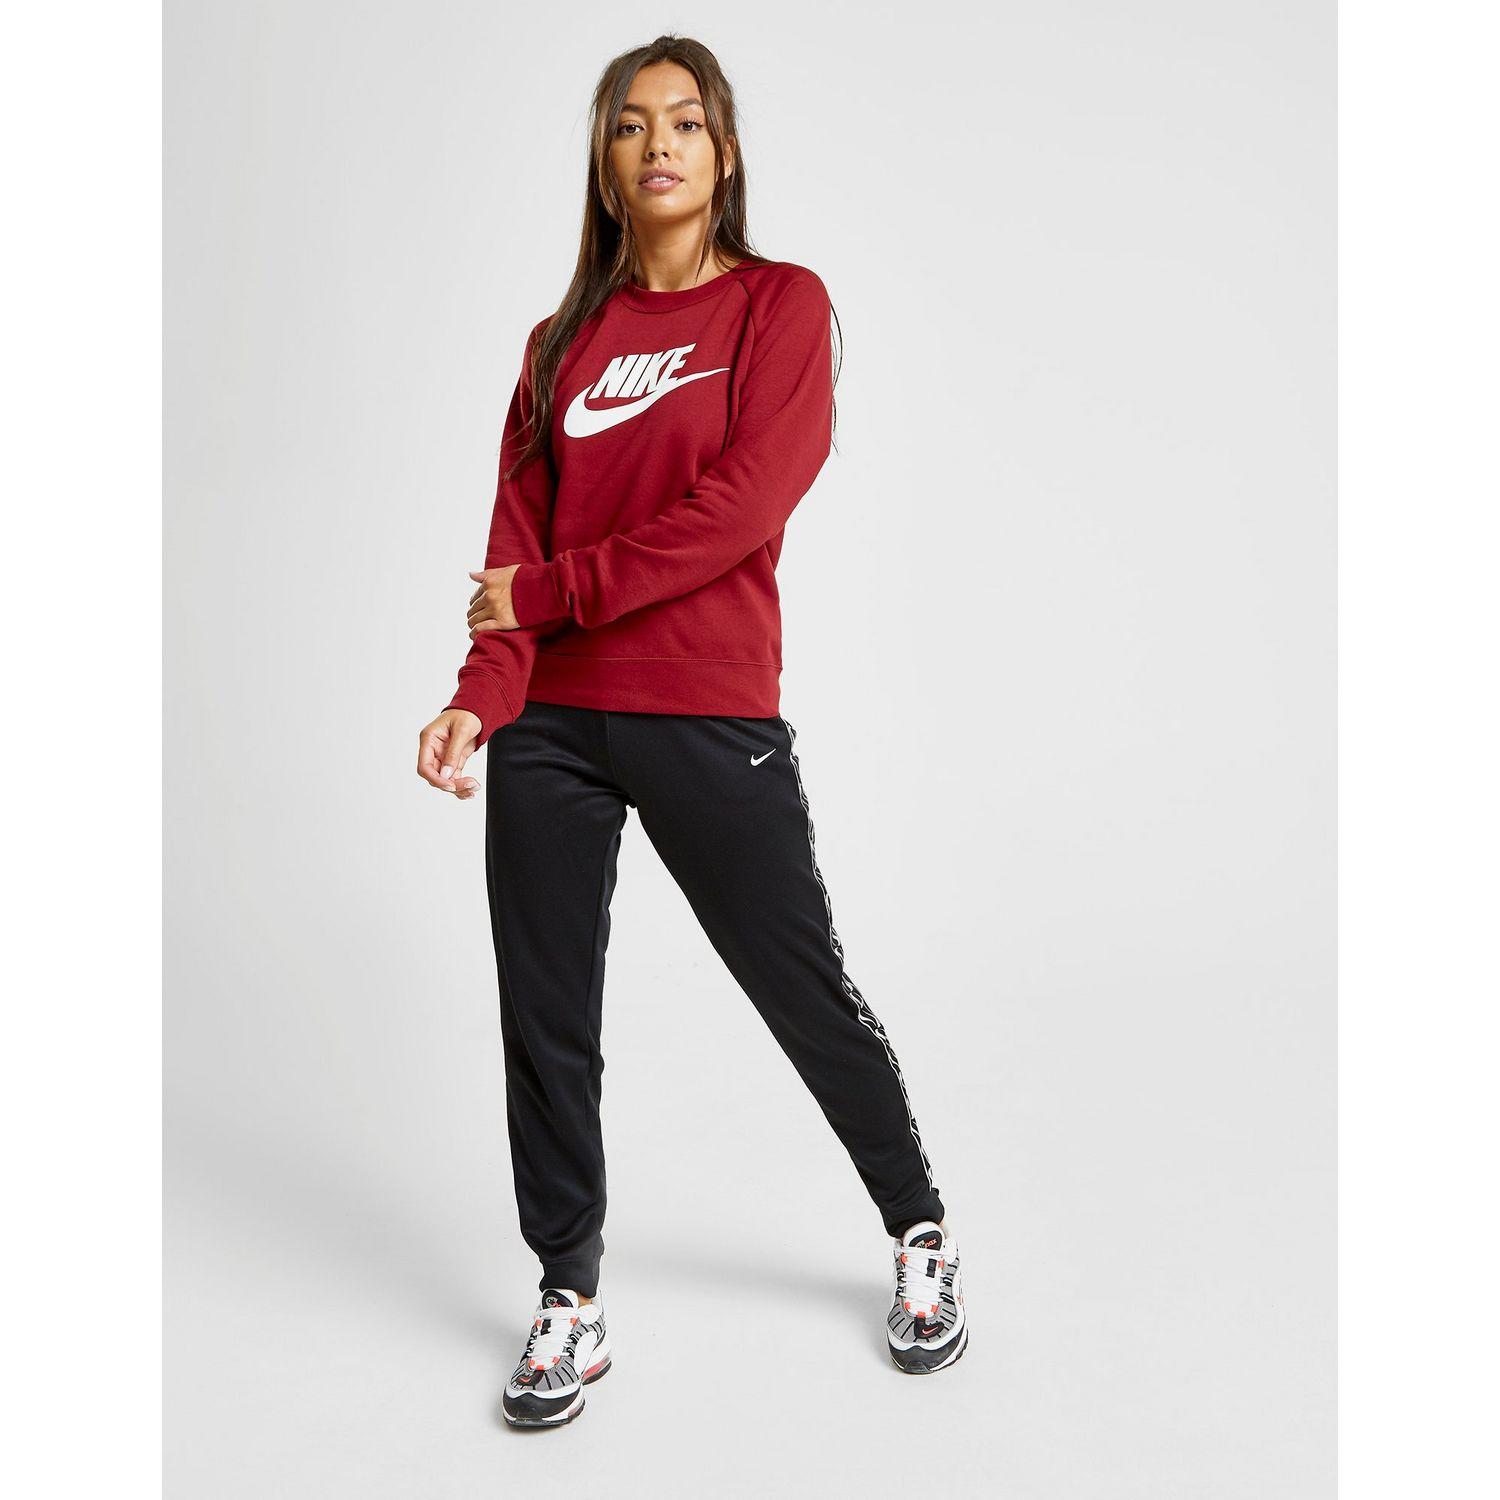 Nike Cotton Essential Futura Crew Sweatshirt in Red/White (Red) - Lyst